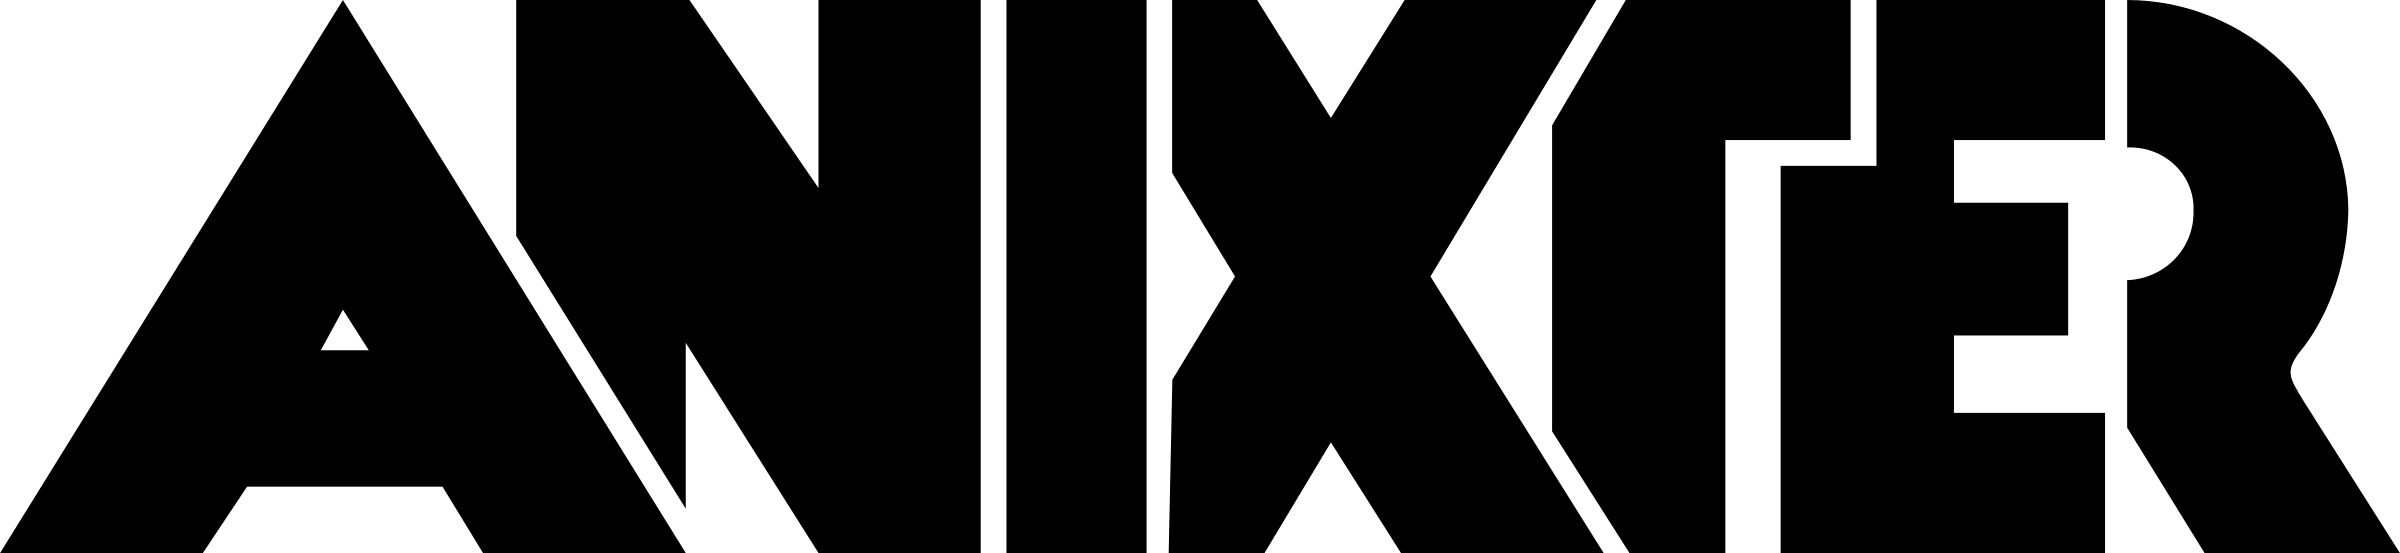 Anixter Logo - Anixter Logo PNG Transparent & SVG Vector - Freebie Supply